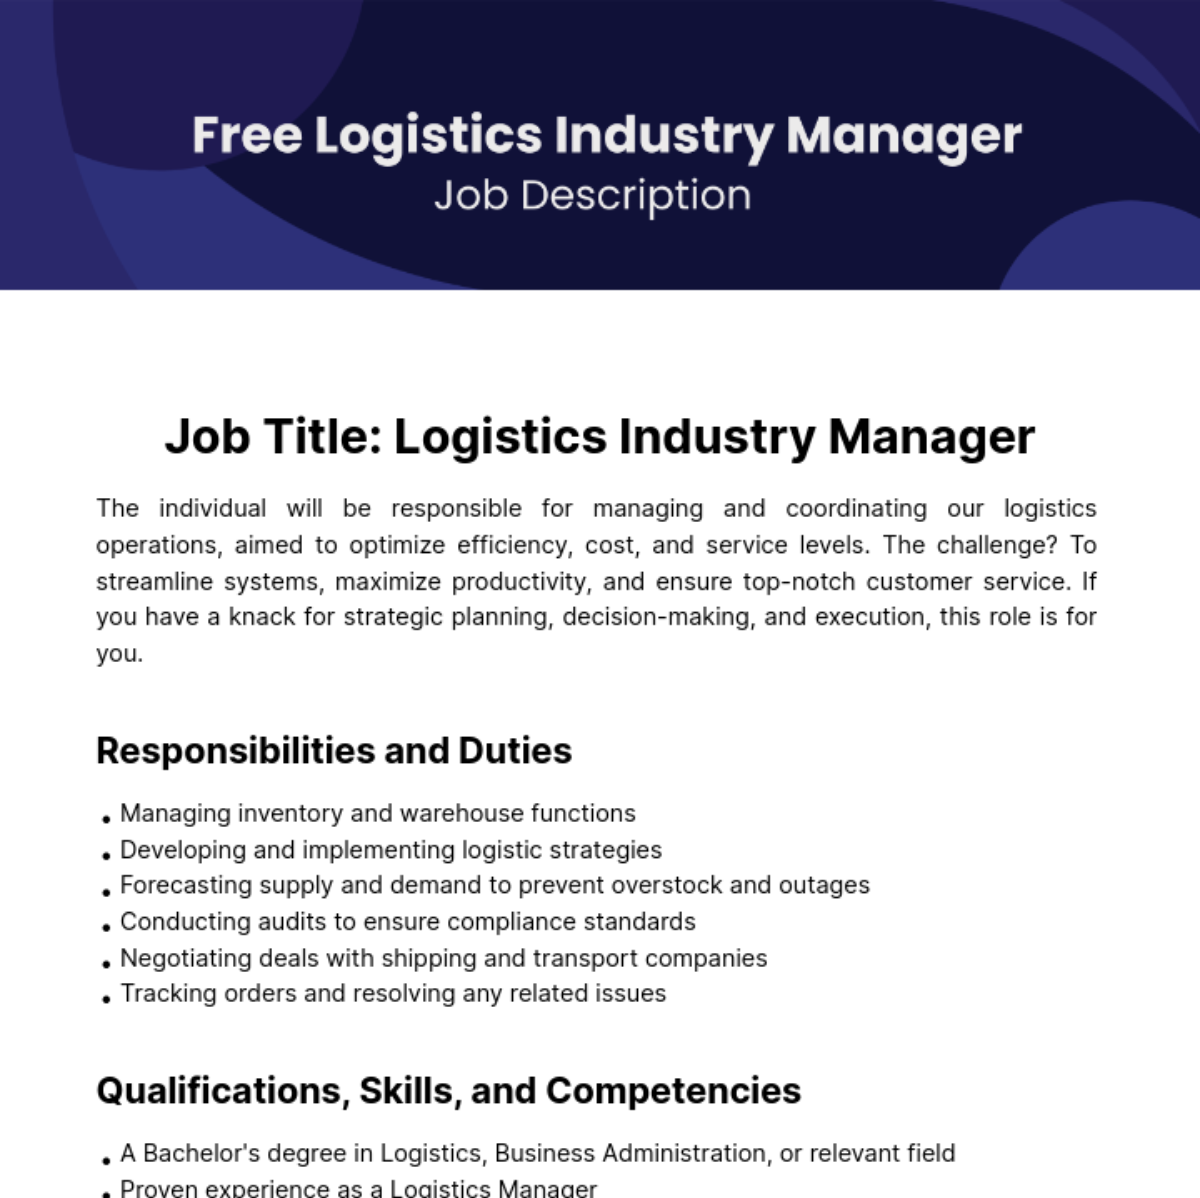 Free Logistics Industry Manager Job Description Template